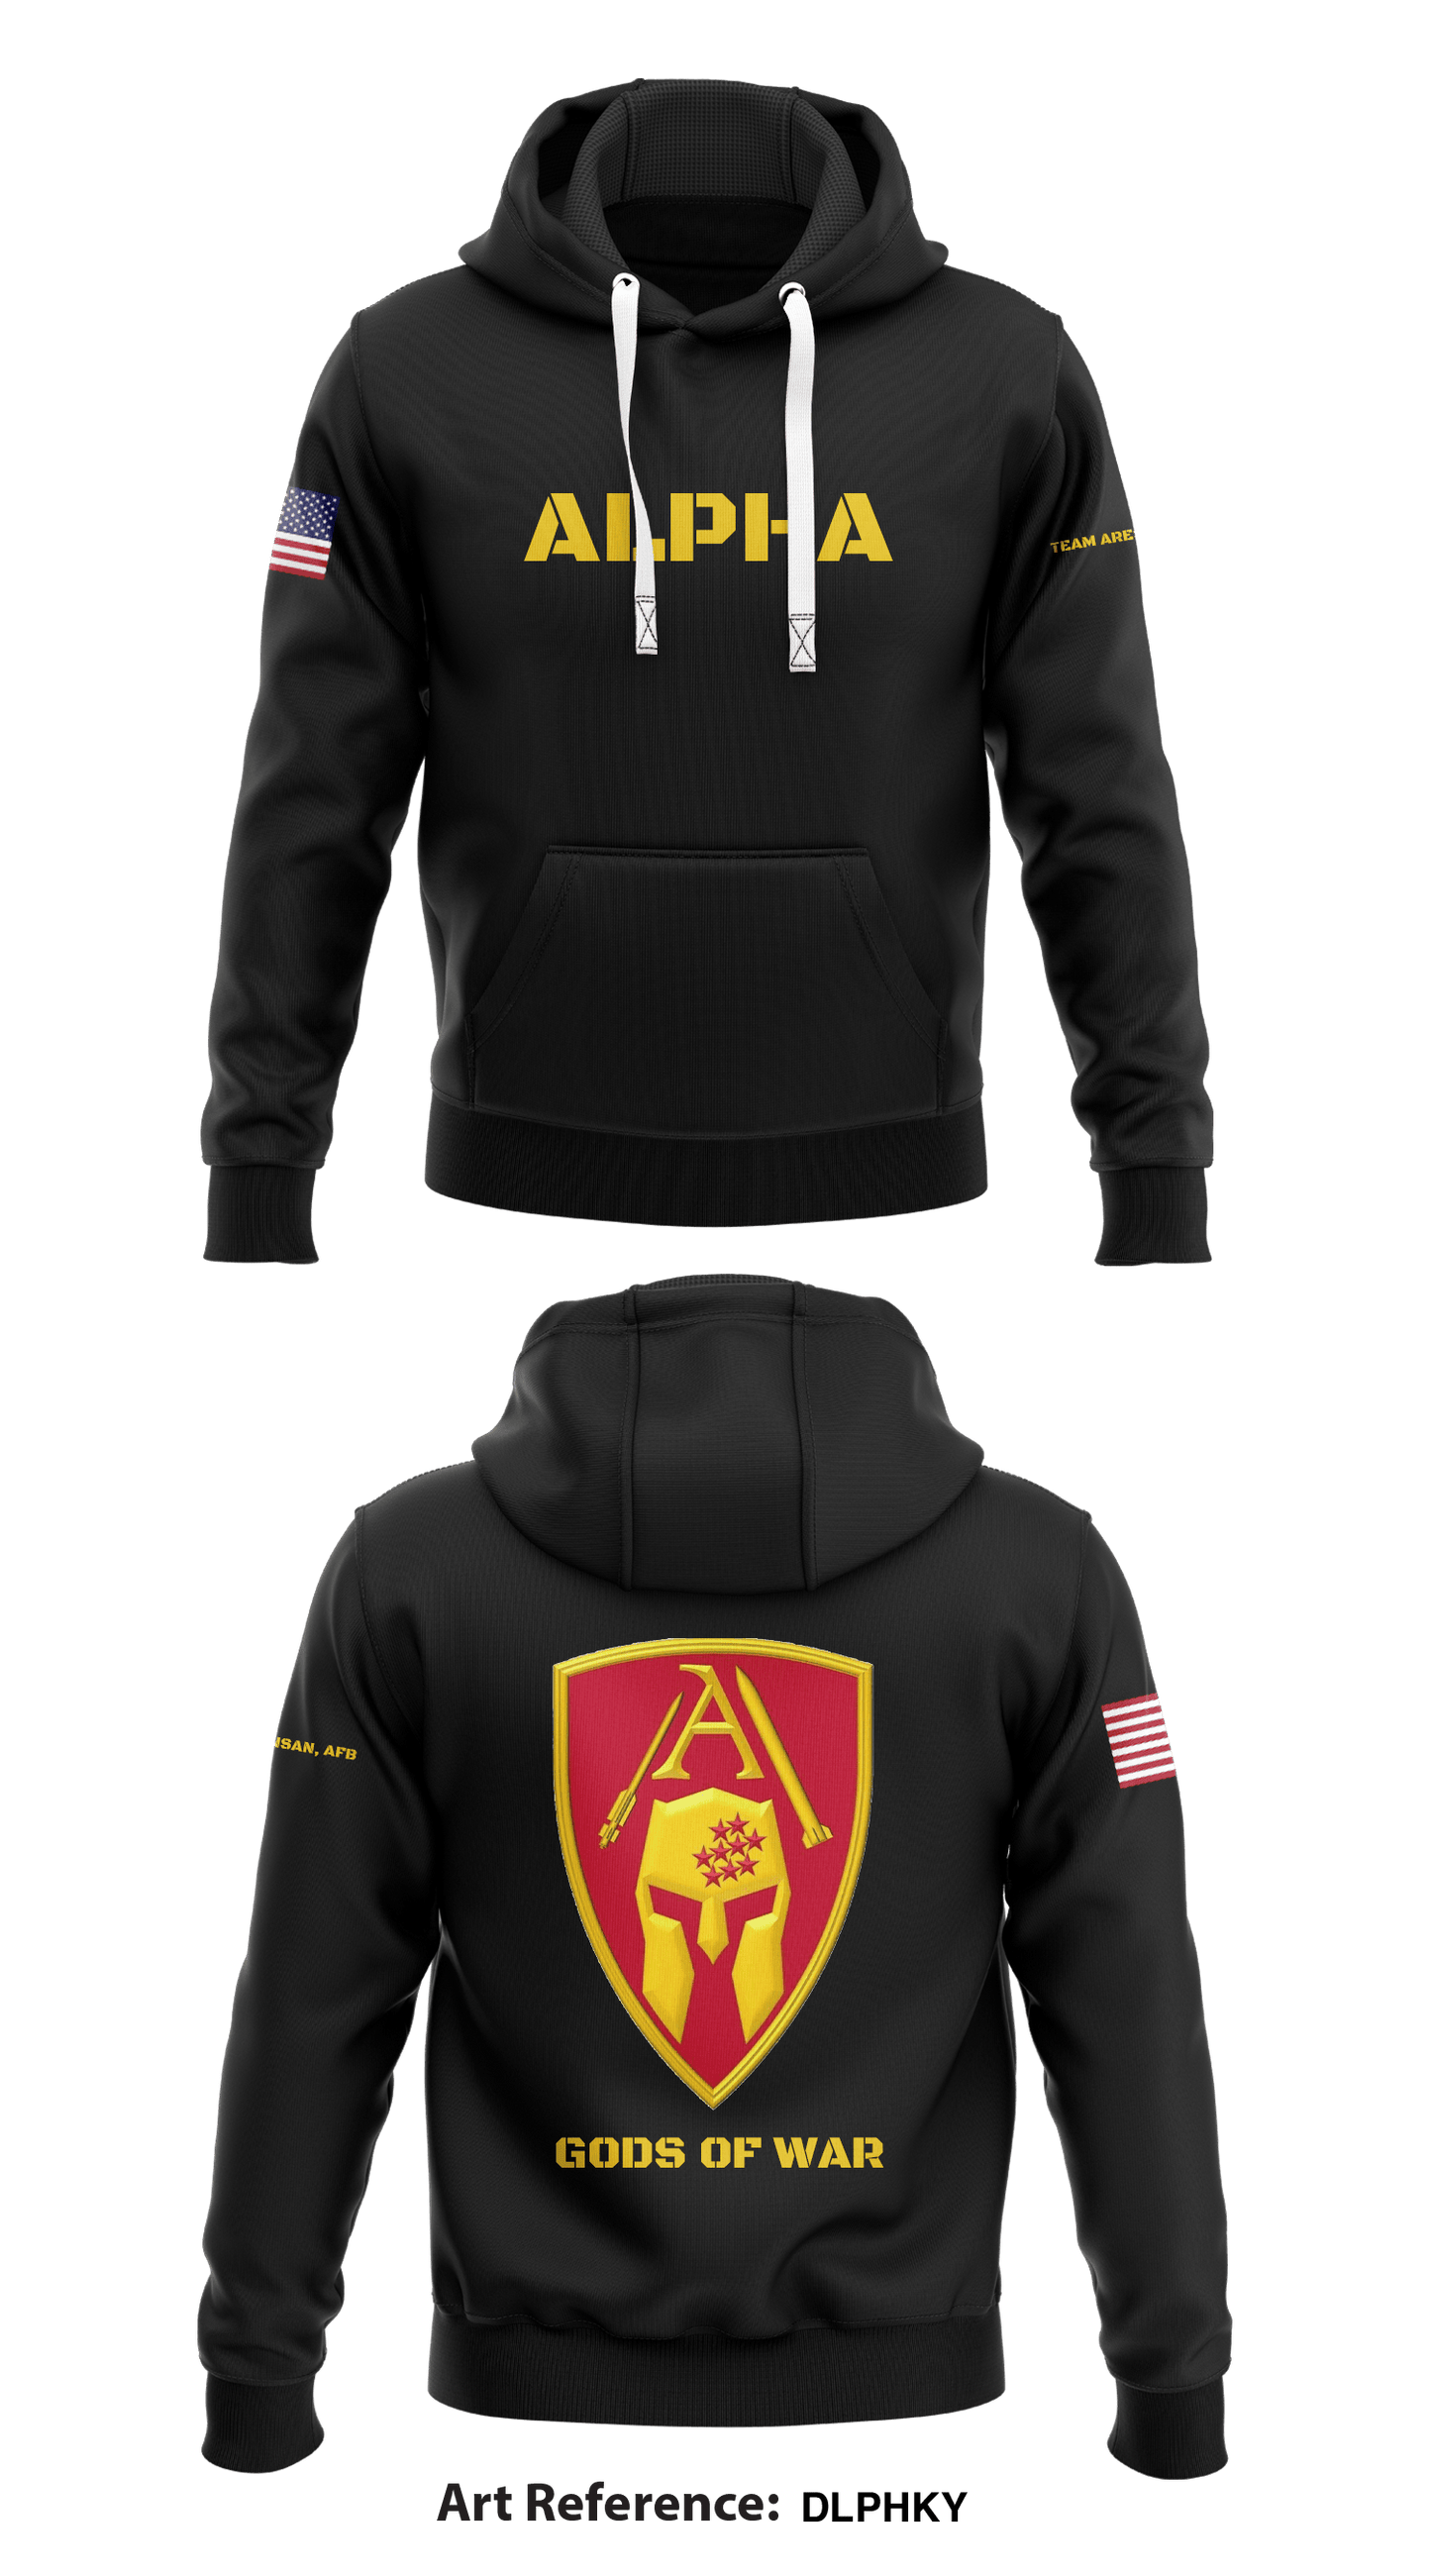 Alpha 2-1 ADA Store 1 Core Men's Hooded Performance Sweatshirt - DLPHky